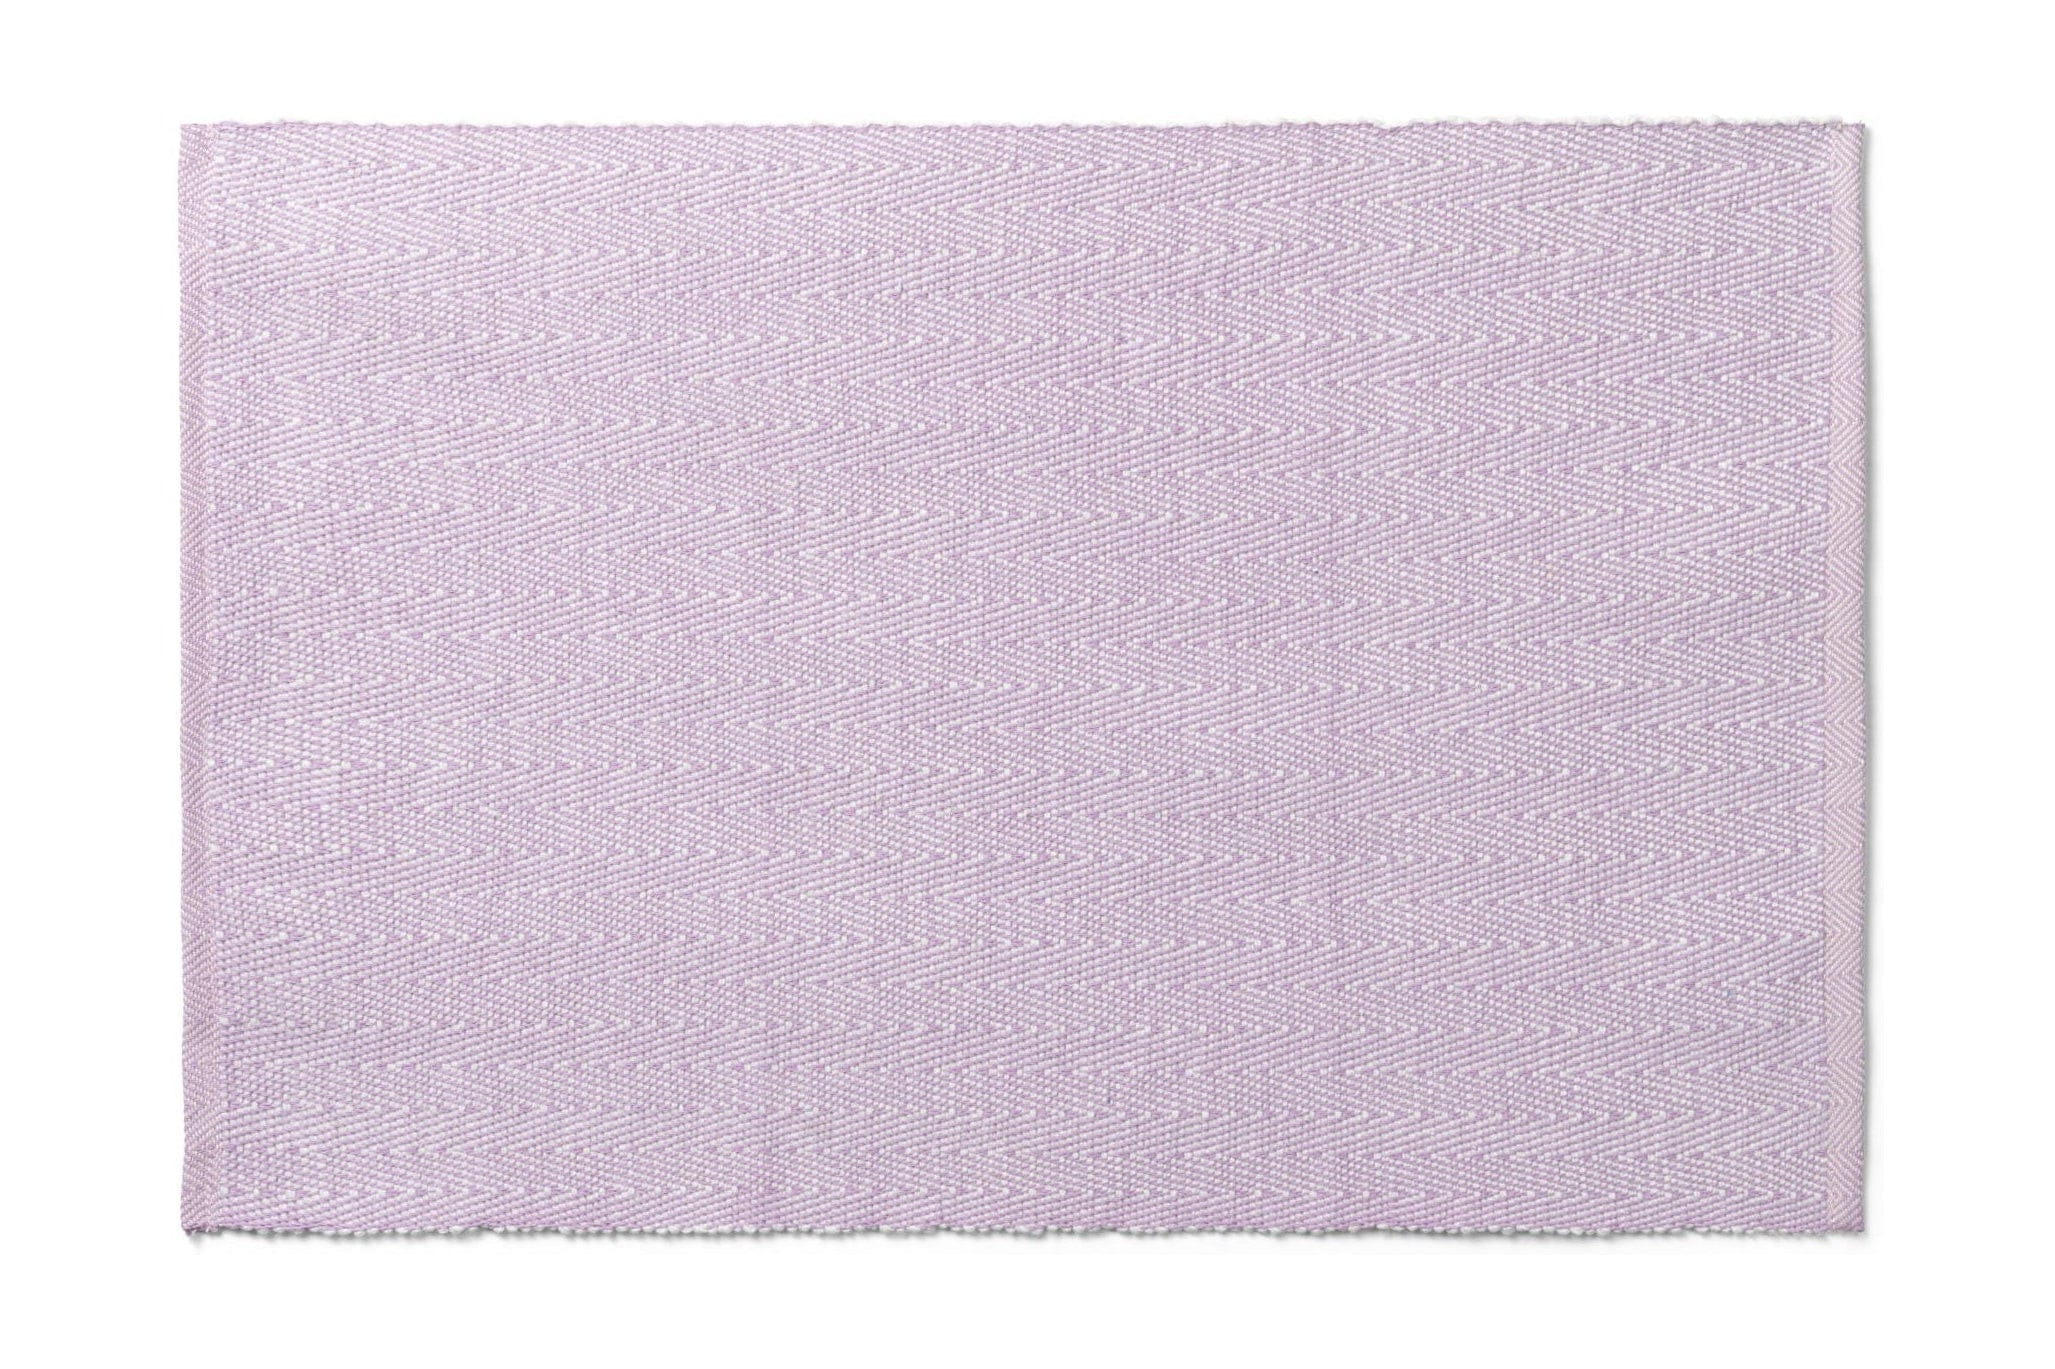 Lyngby Porcelæn Sillbenskydd servett 43x30 cm, lila